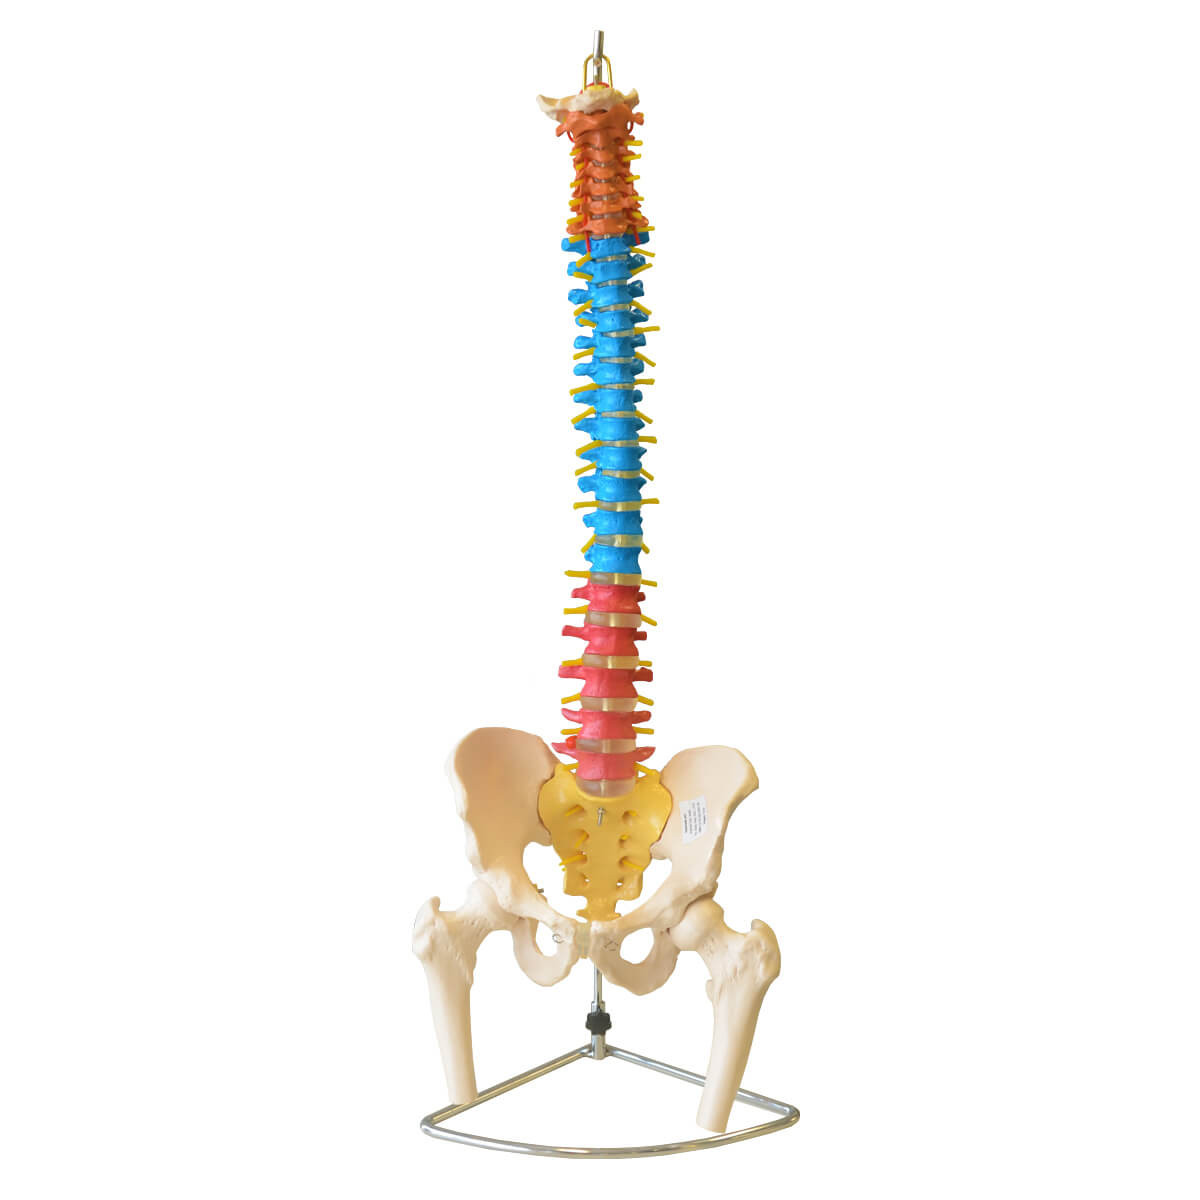 https://www.bleymed.com.br/media/product/781/coluna-vertebral-colorida-em-tamanho-natural-7e5.jpg